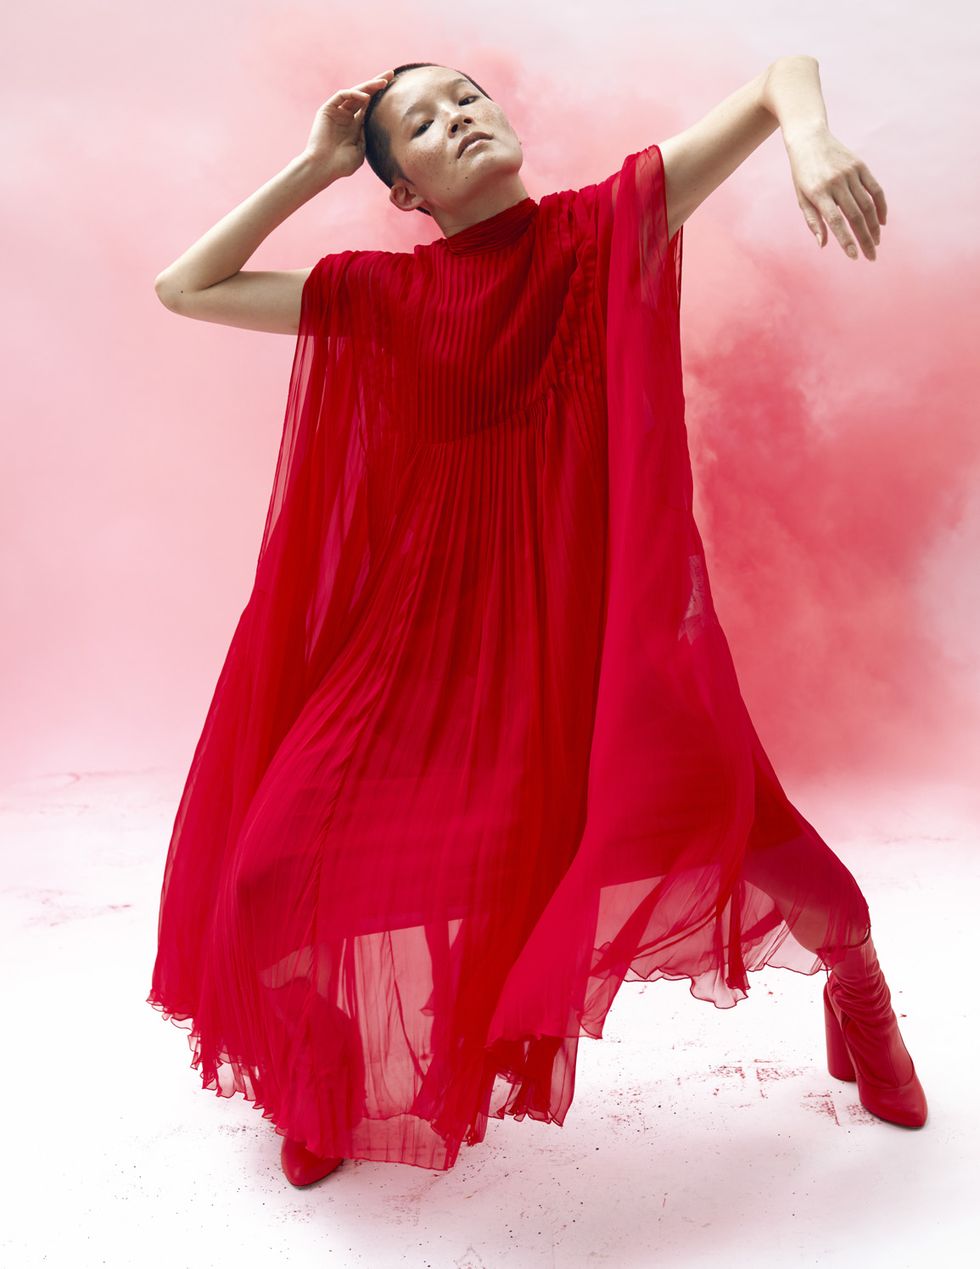 Red, Clothing, Pink, Dress, Shoulder, Outerwear, Formal wear, Dance, Dancer, Performing arts, 